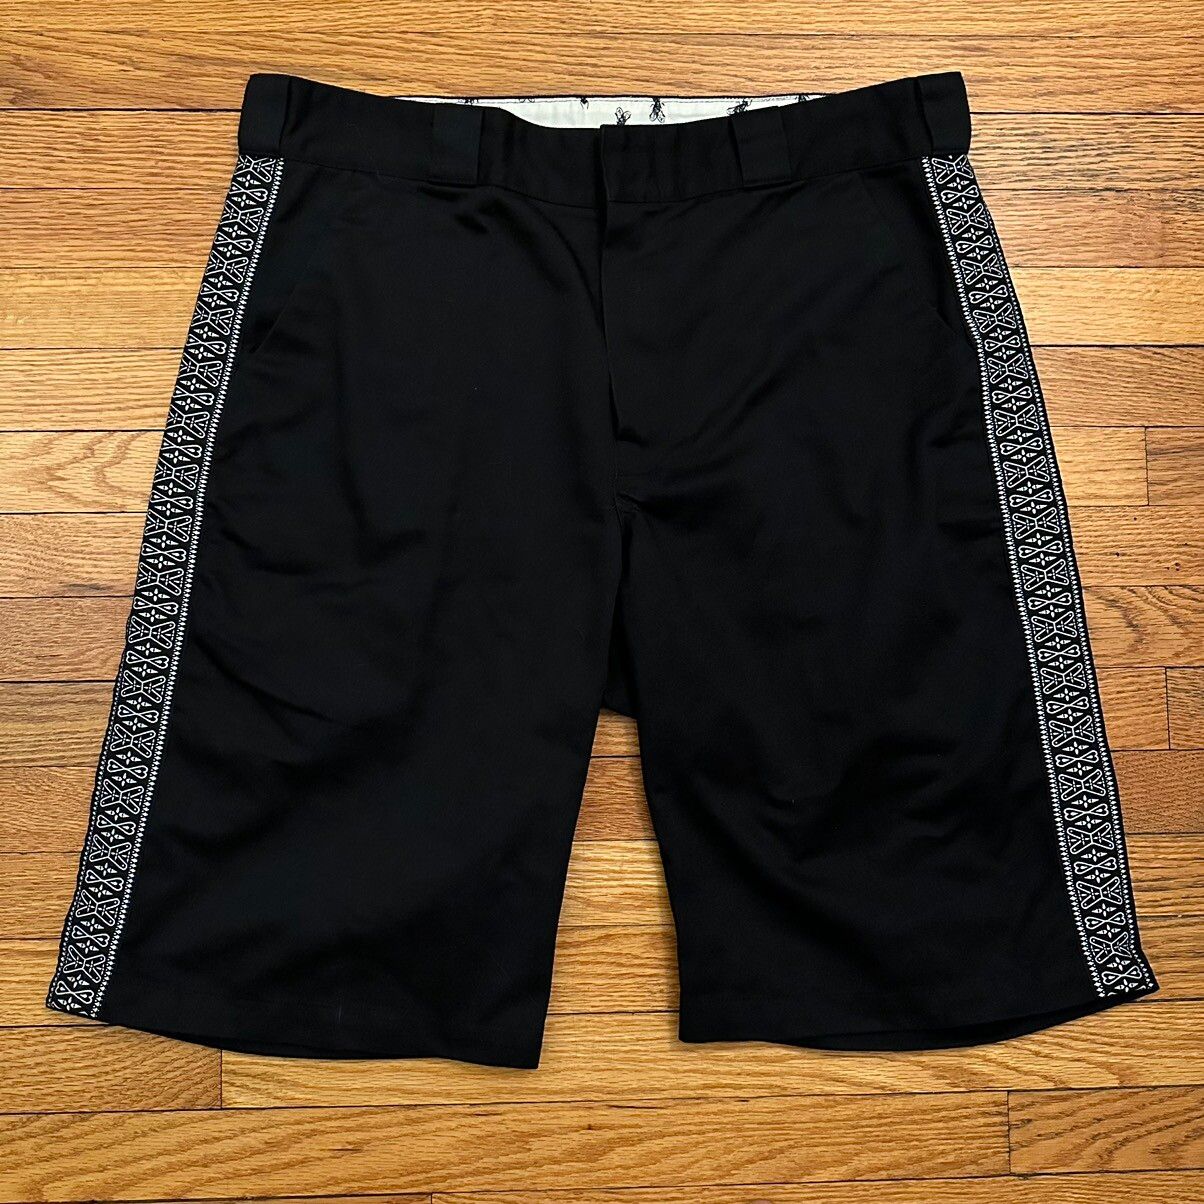 Neighborhood Neighborhood Japan Technical Apparel Black Chino Shorts Size US 36 / EU 52 - 1 Preview